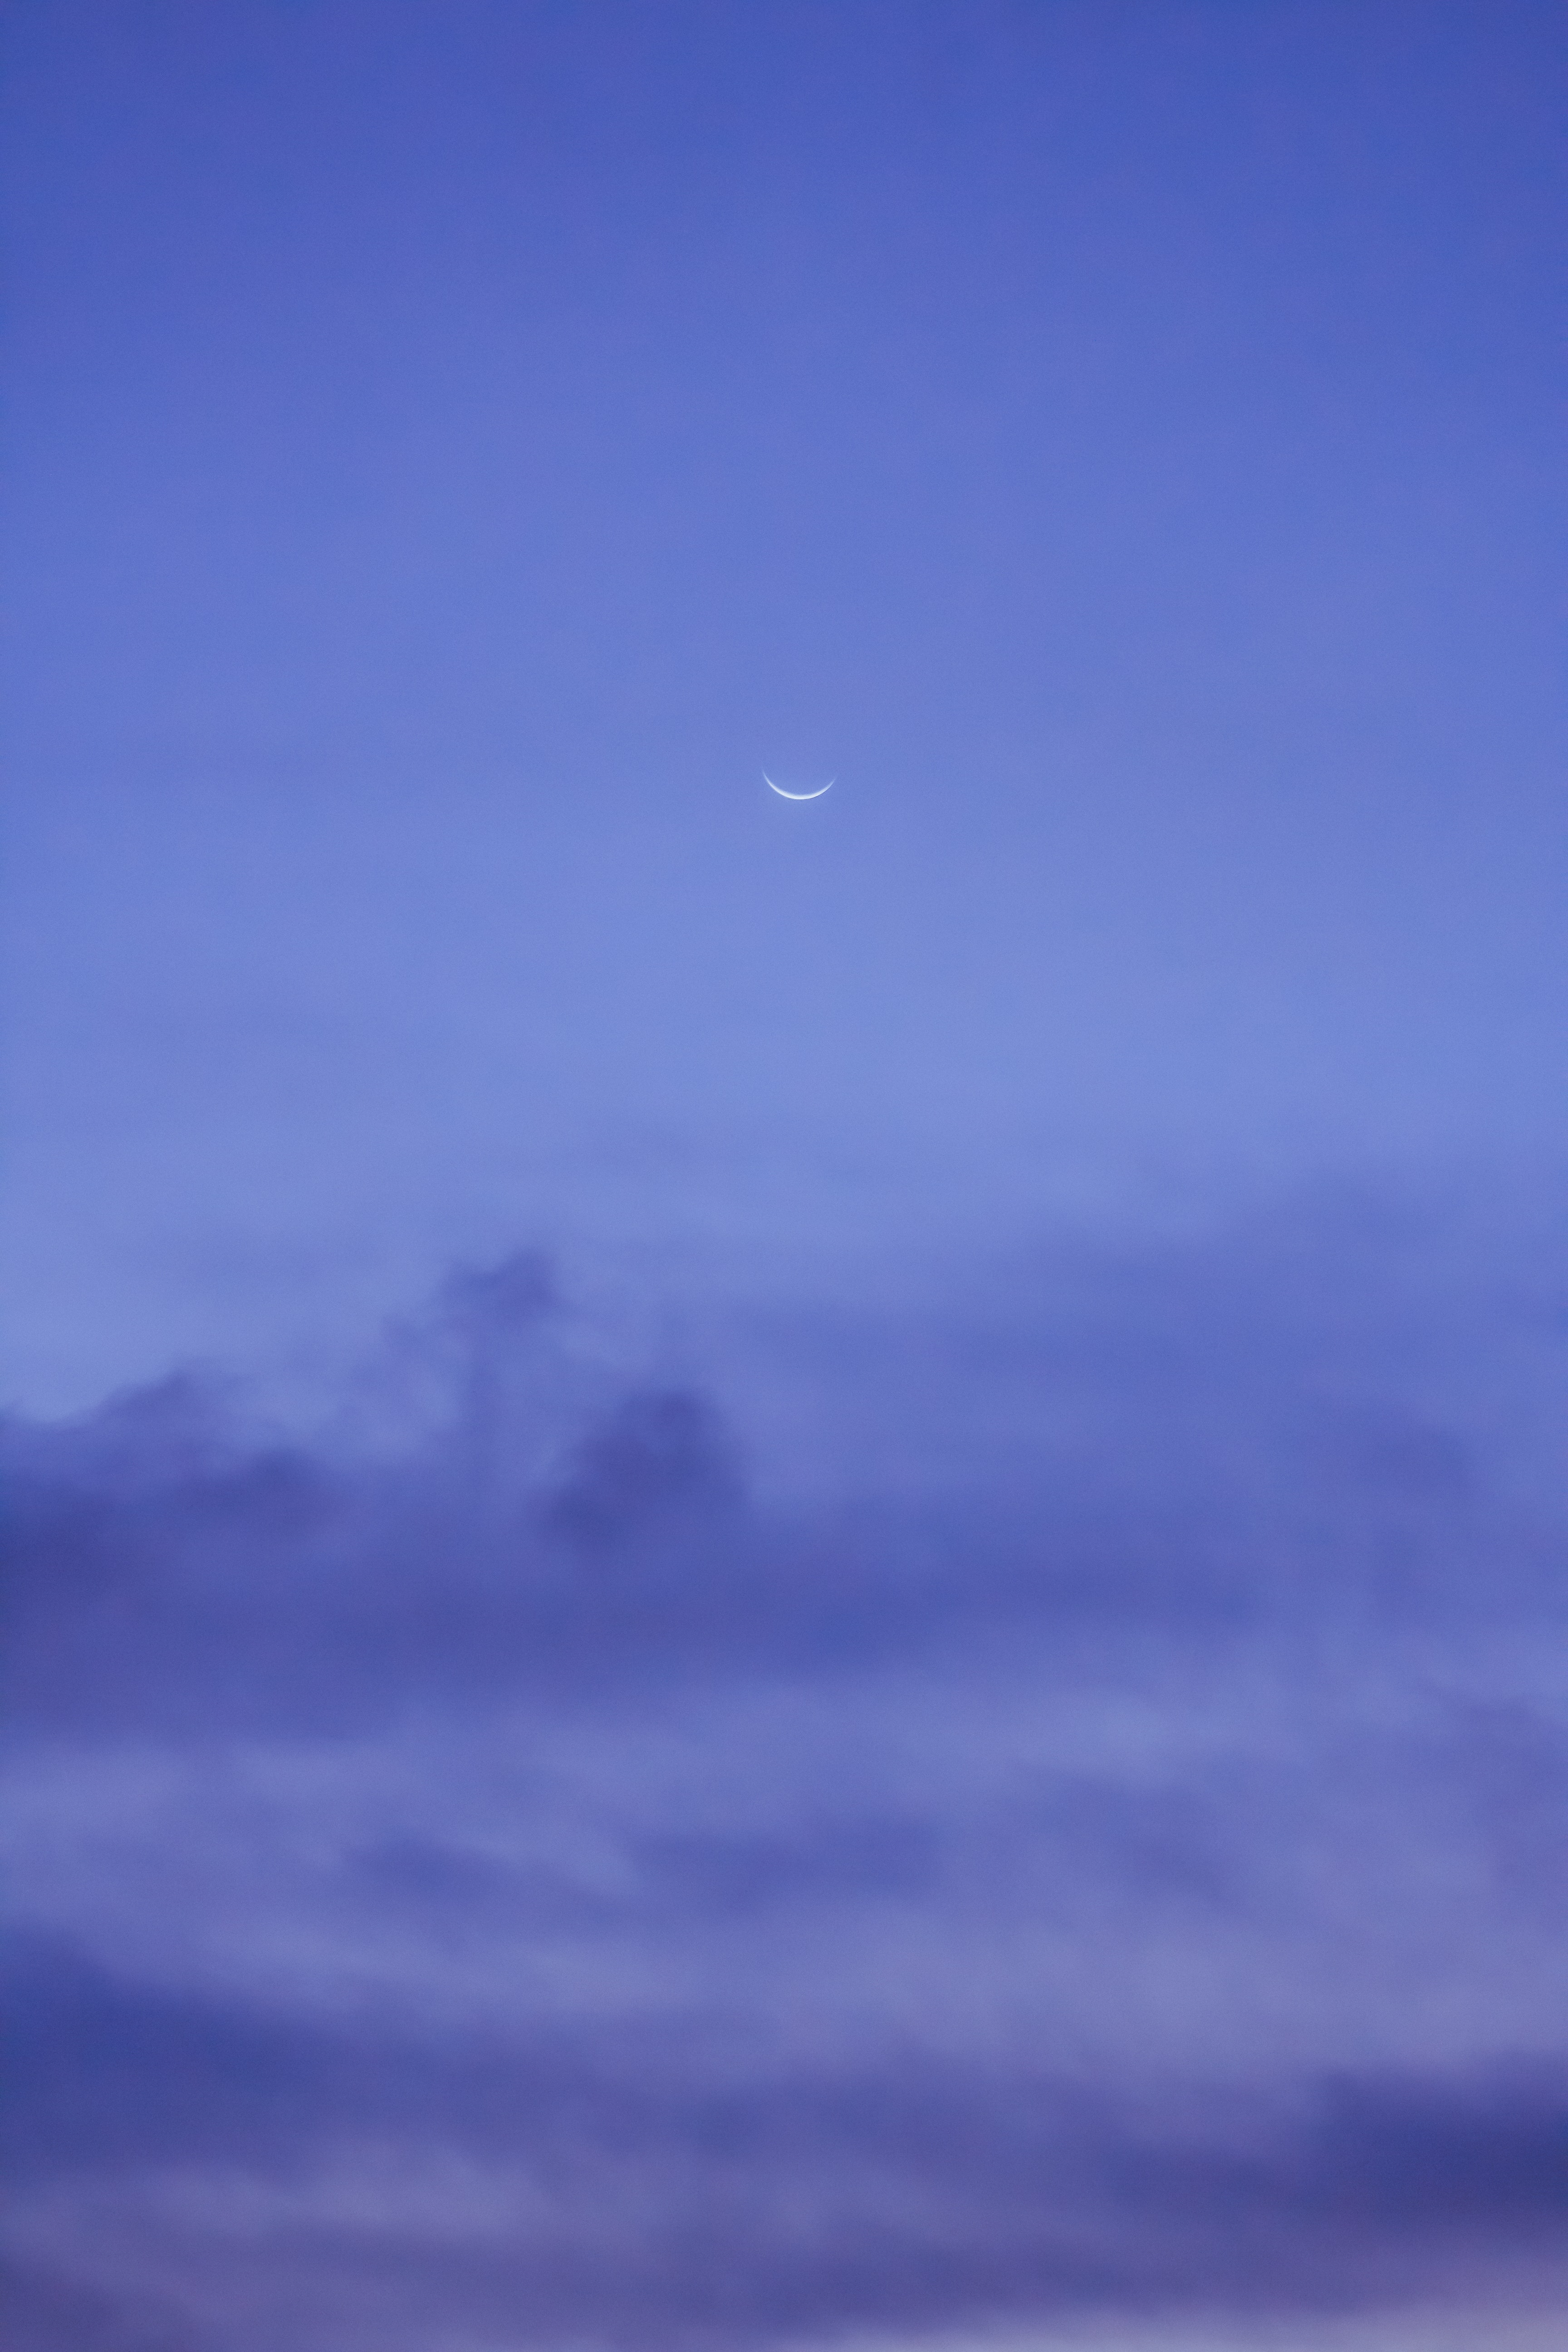 Half moon against dark blue sky at night · Free